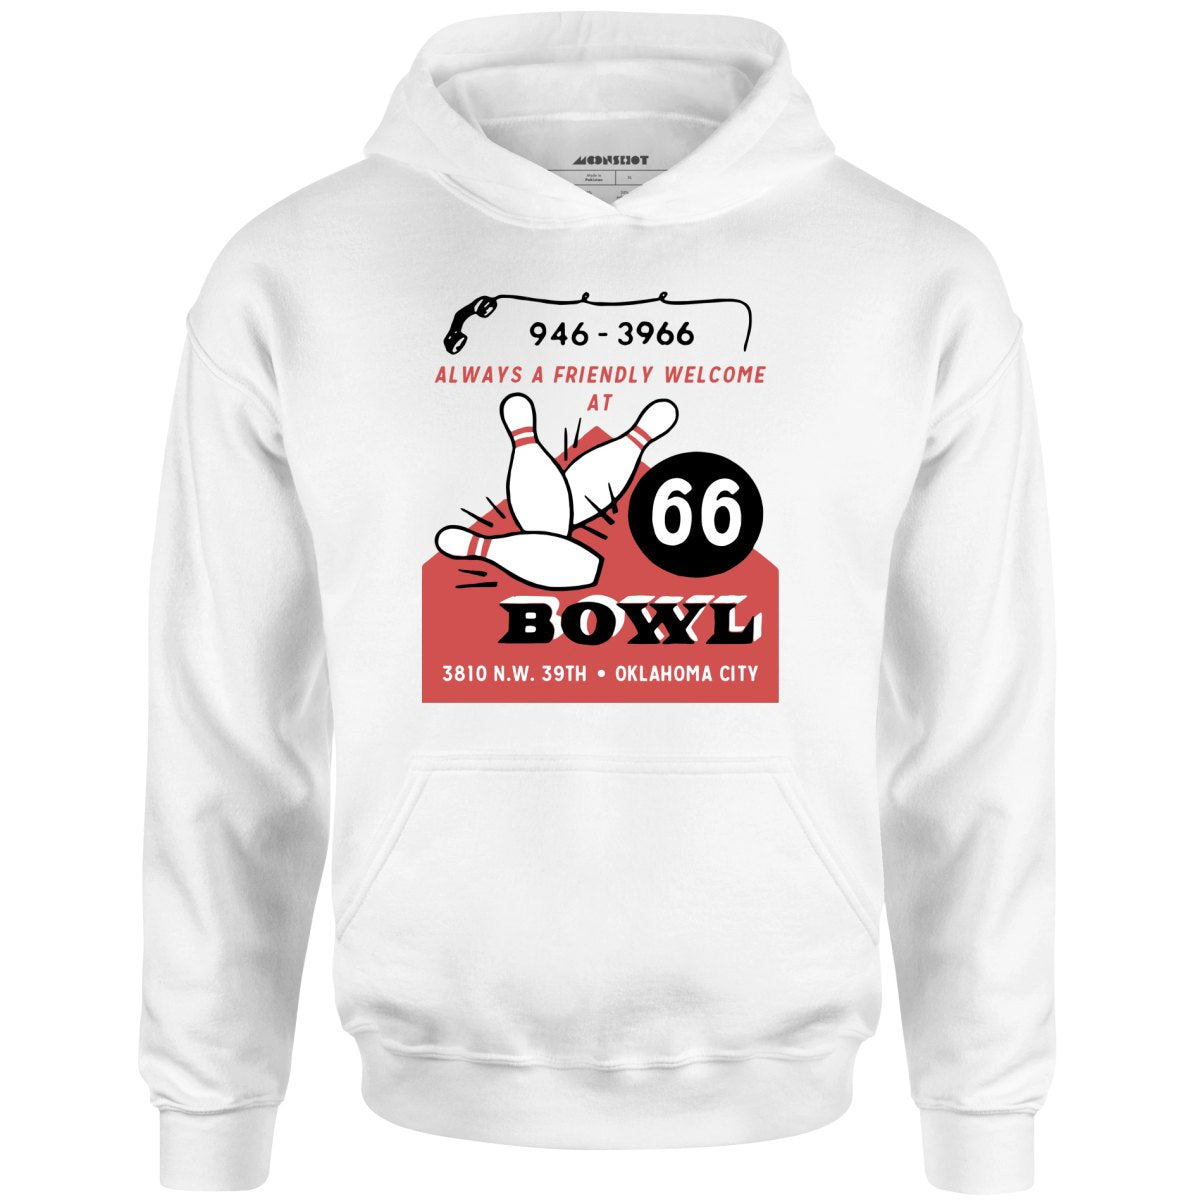 66 Bowl - Oklahoma City, OK - Vintage Bowling Alley - Unisex Hoodie